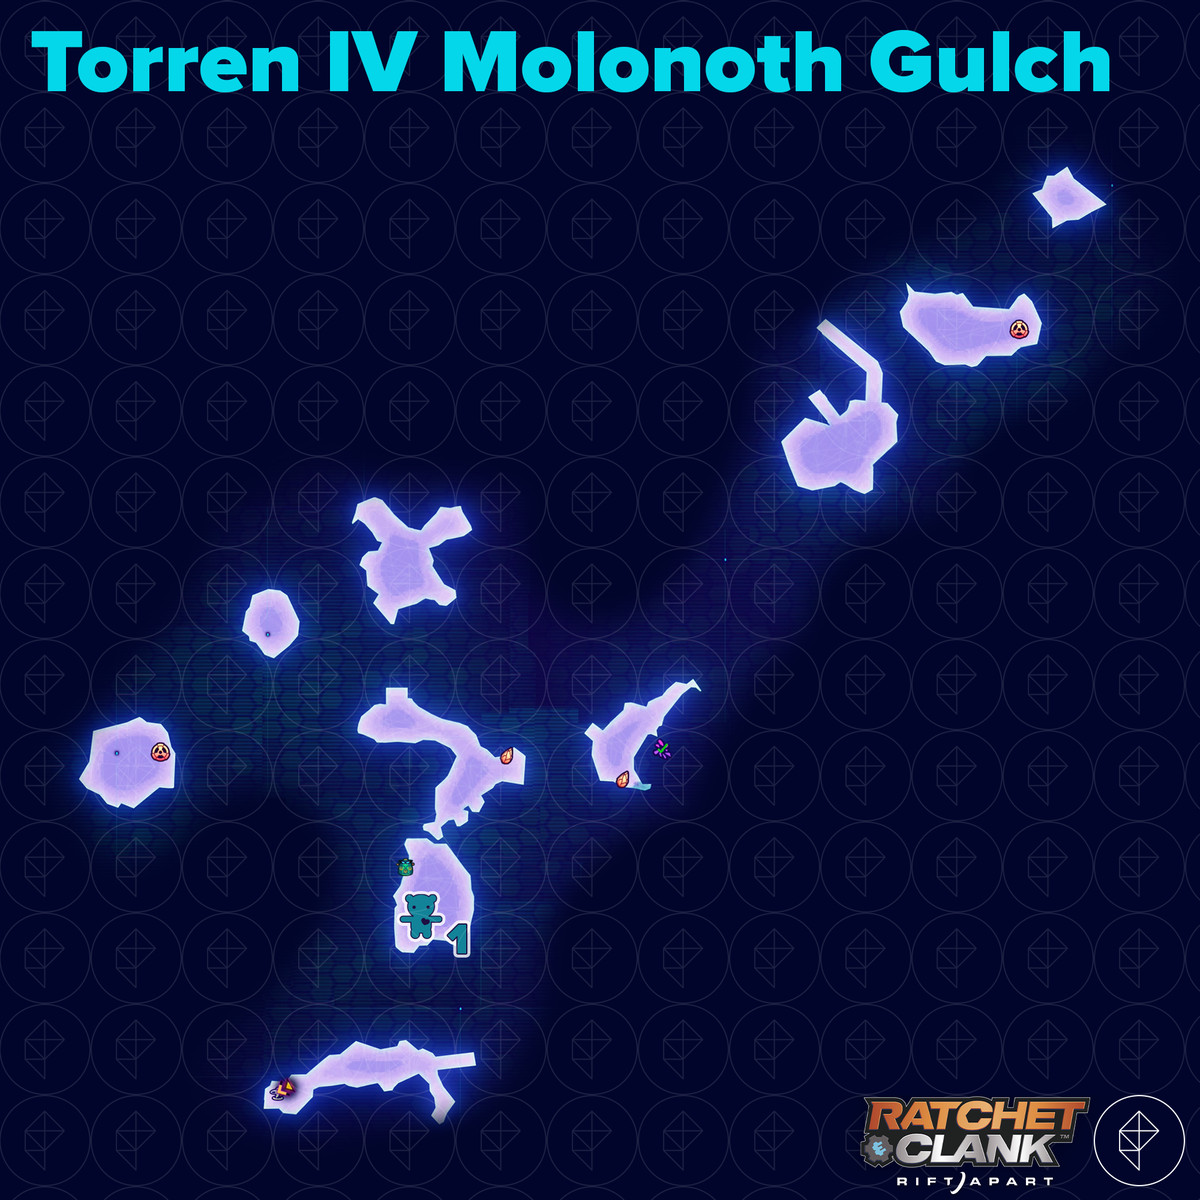 Ratchet &amp; Clank: Rift Apart collectibles guide: Torren IV Molonoth Gulch